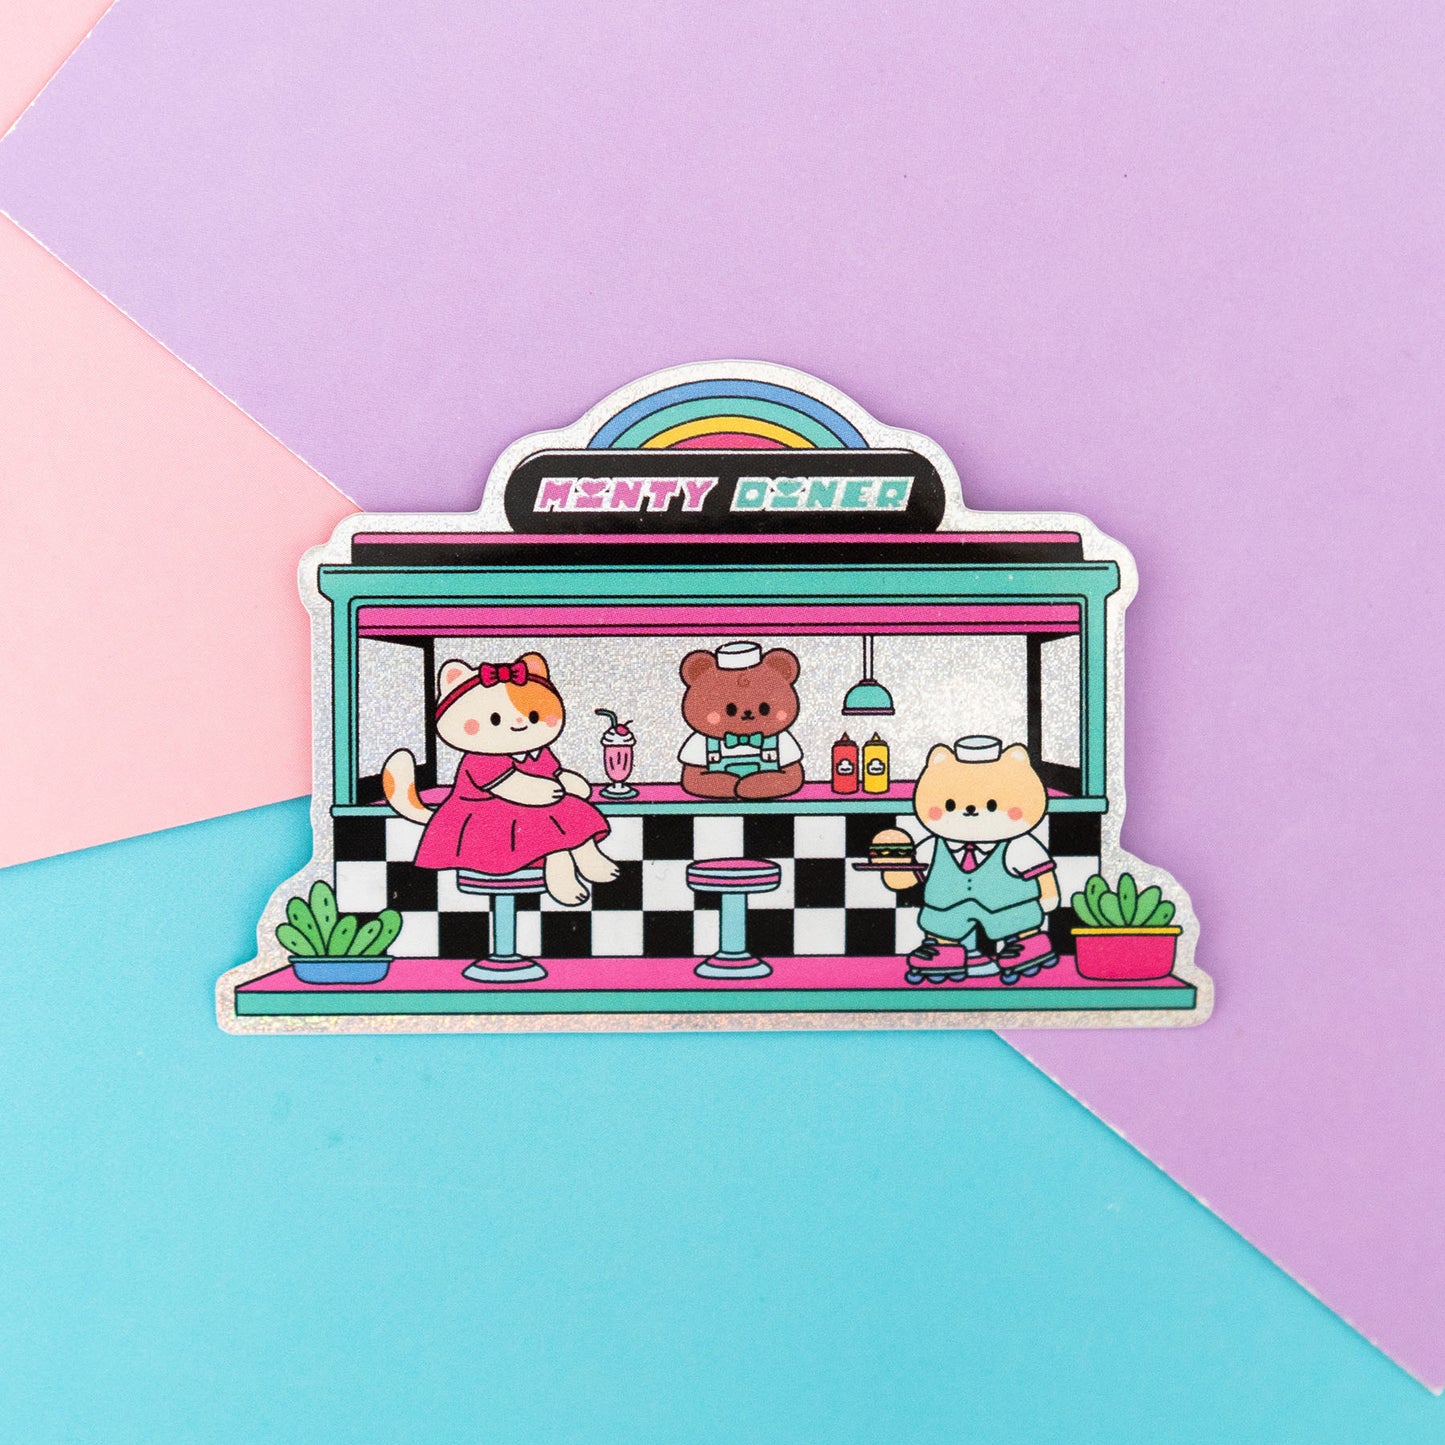 *new* mintymentaiko Kitschy Cute Die Cut Stickers Bundle 1